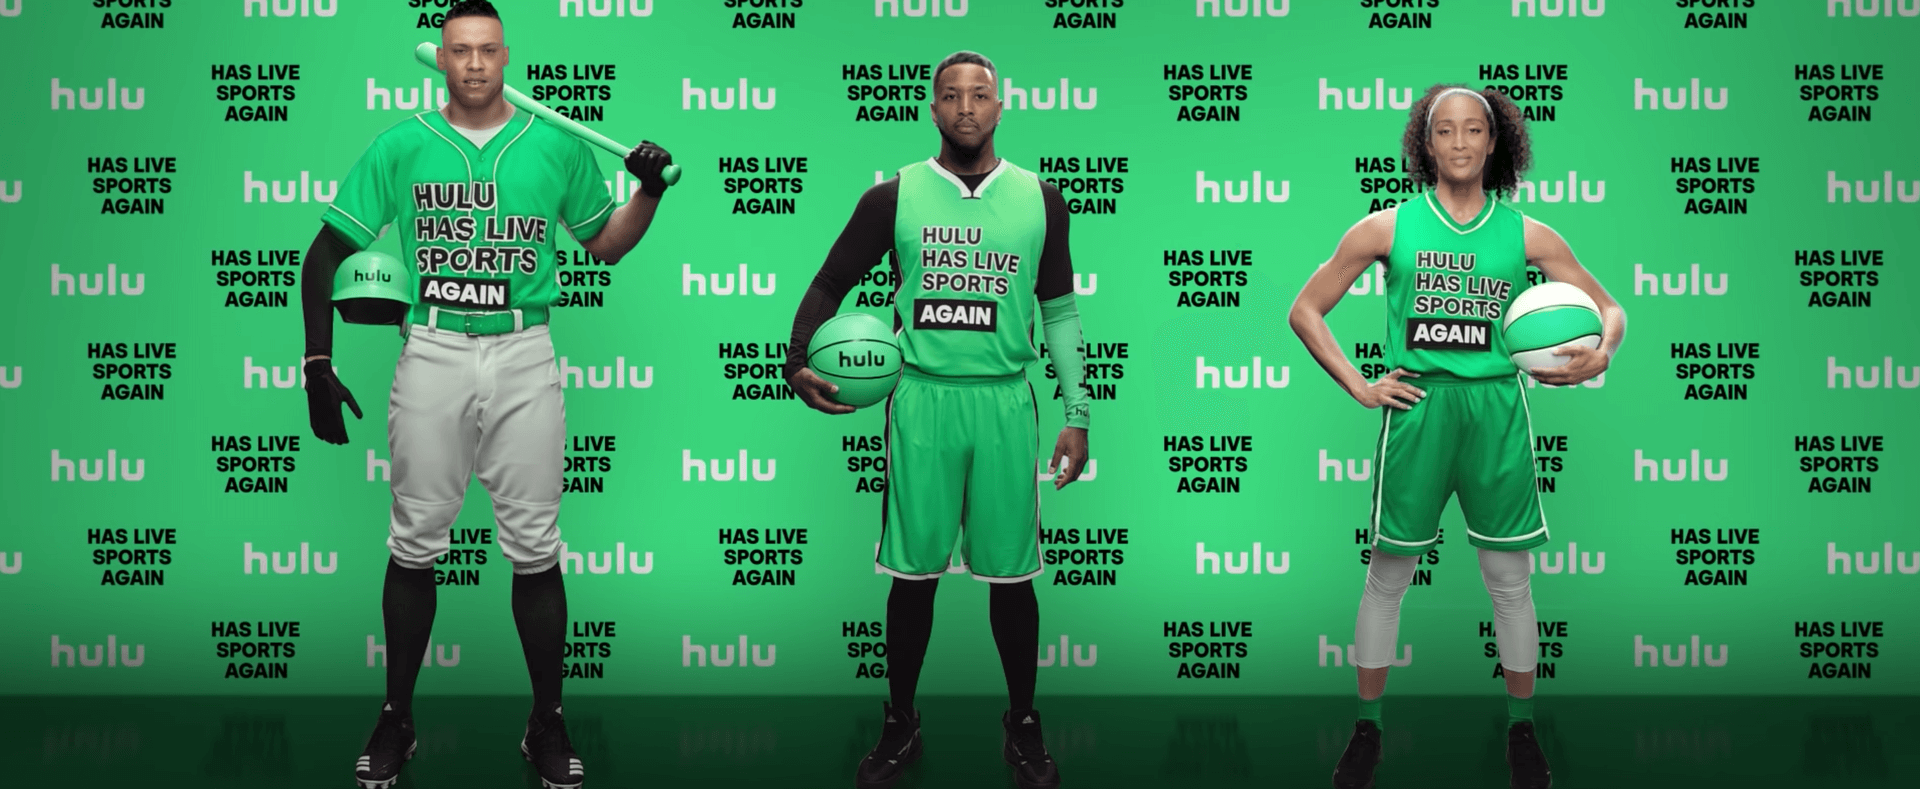 Hulu Has Live Sports Again